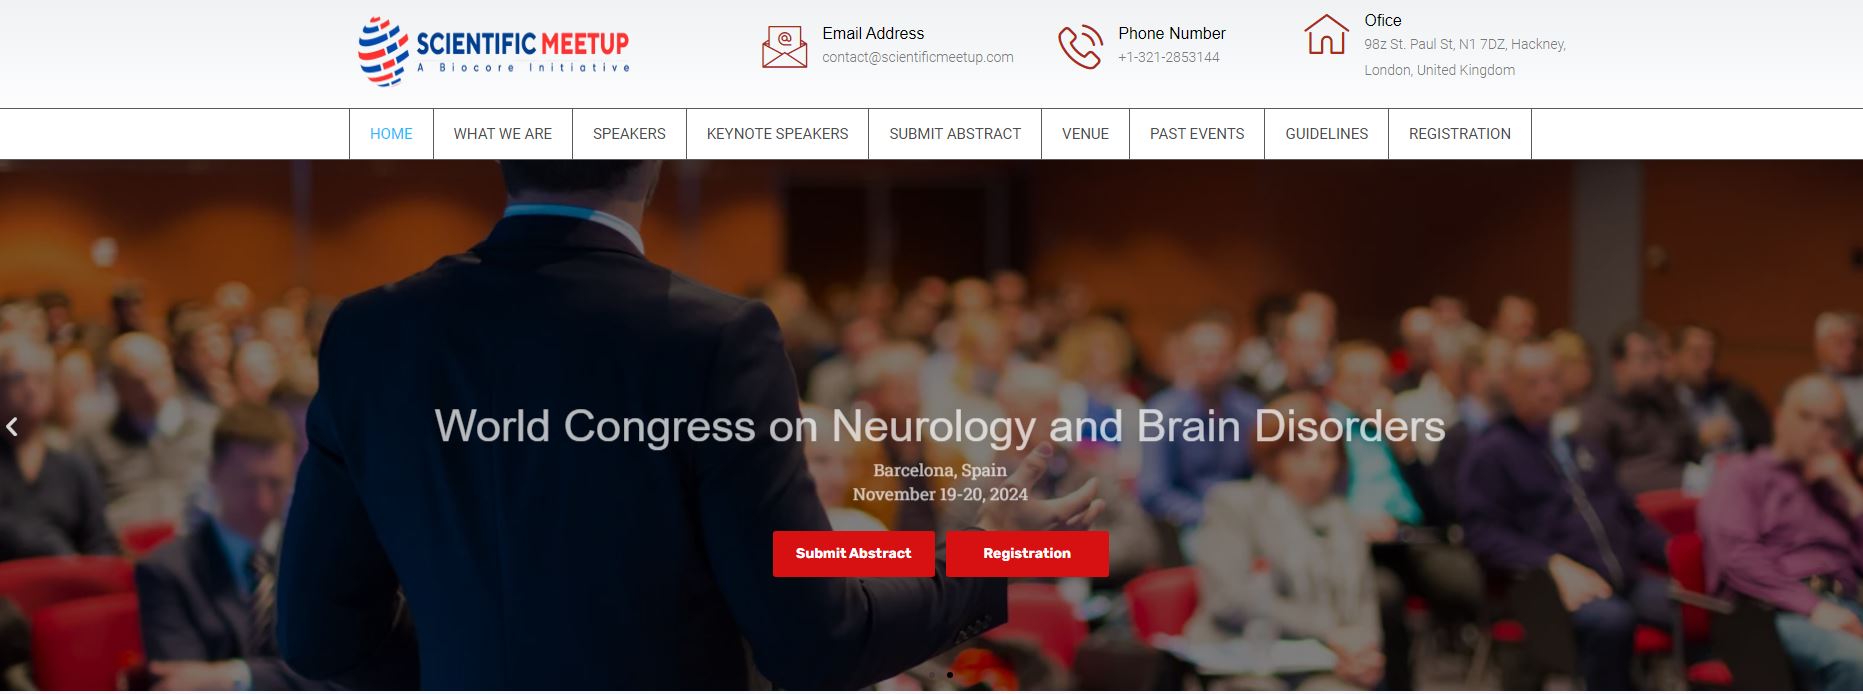 World Congress on Neurology and Brain Disorders during, November 19-20, 2024, Barcelona, Spain, Barcelona, Spain